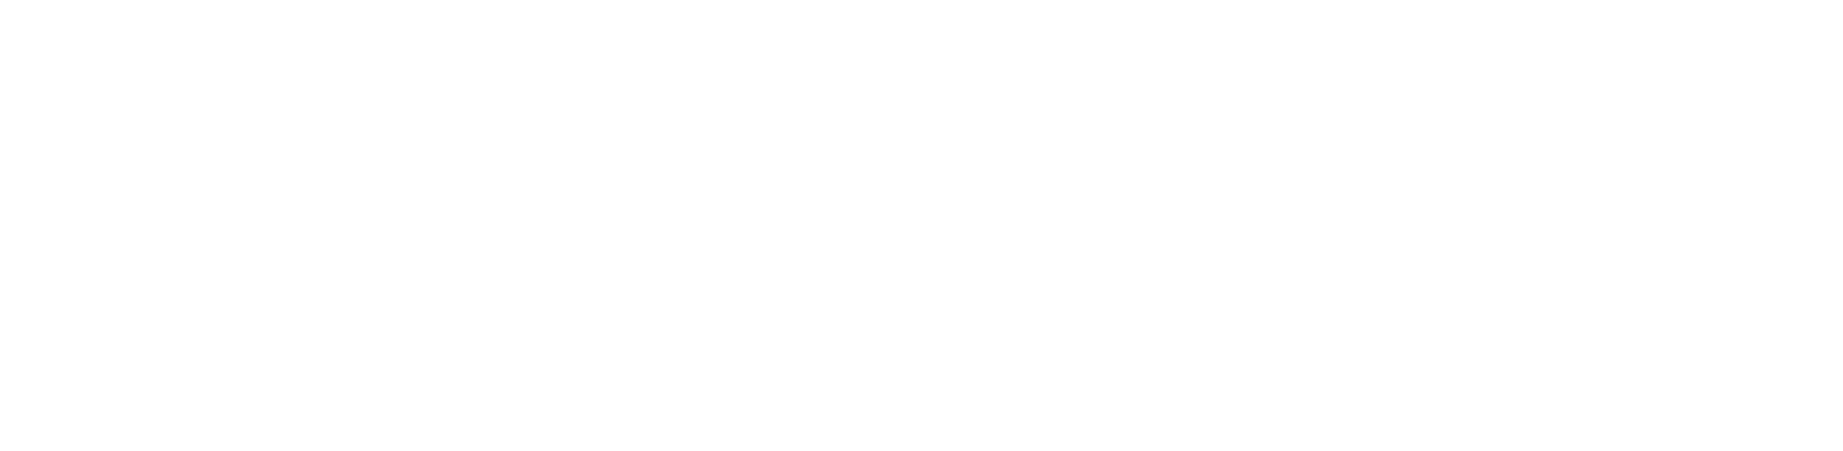 Streptococcus Antibodies Profile